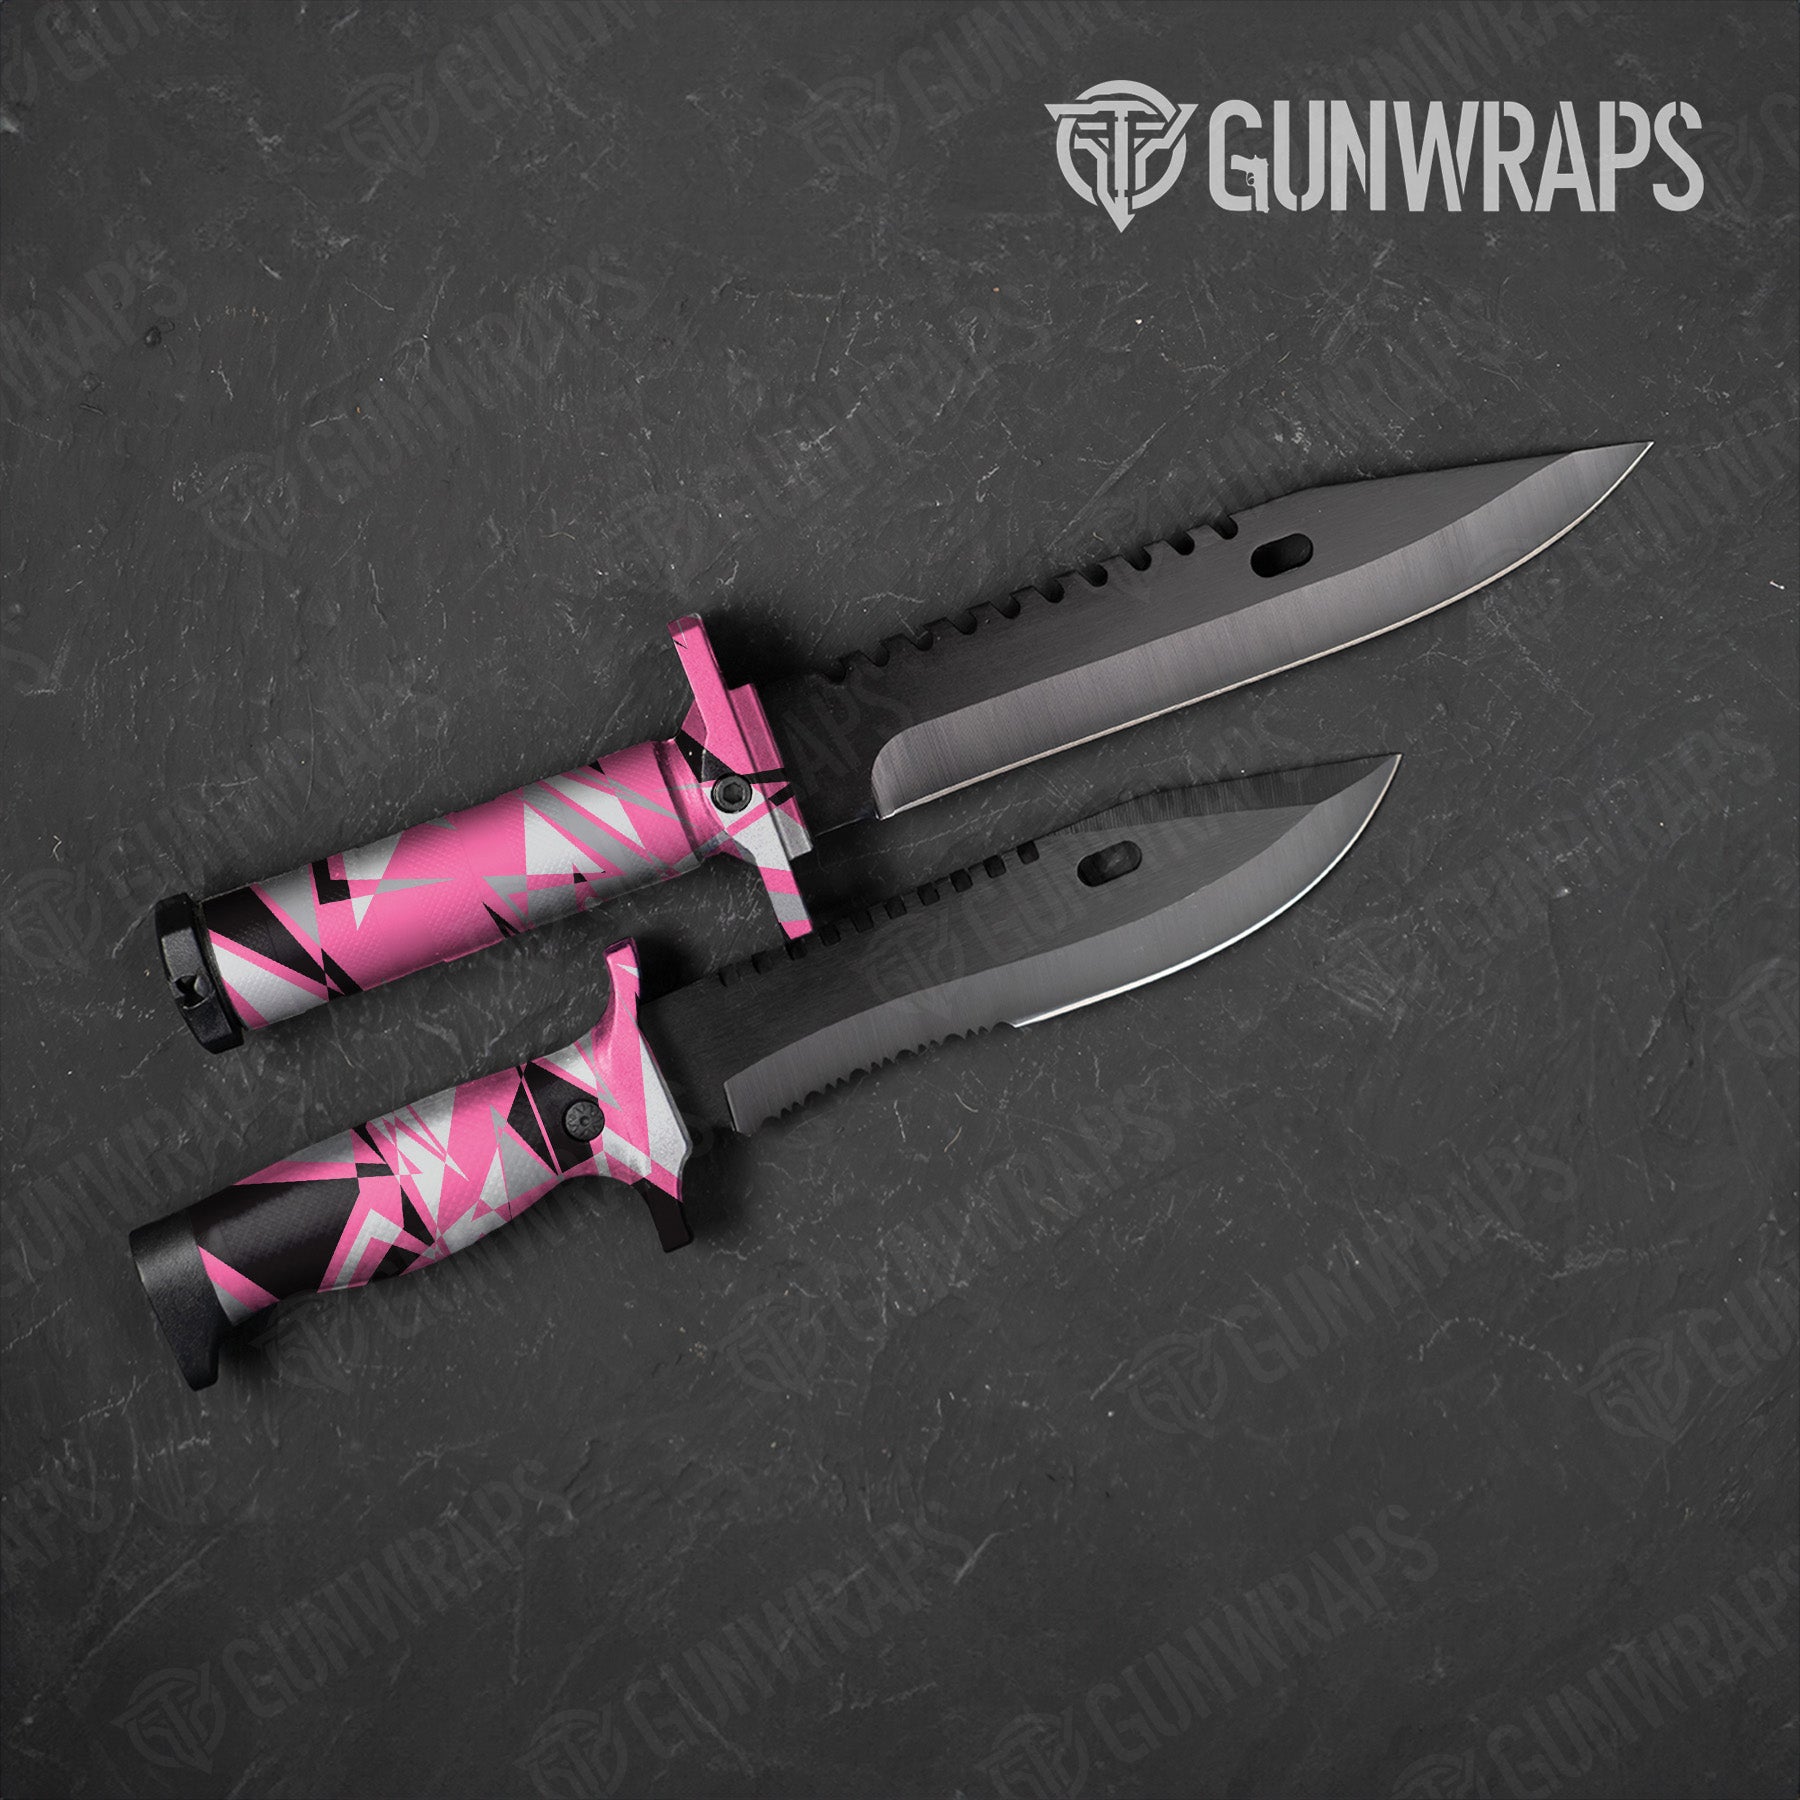 Sharp Pink Tiger Camo Knife Gear Skin Vinyl Wrap